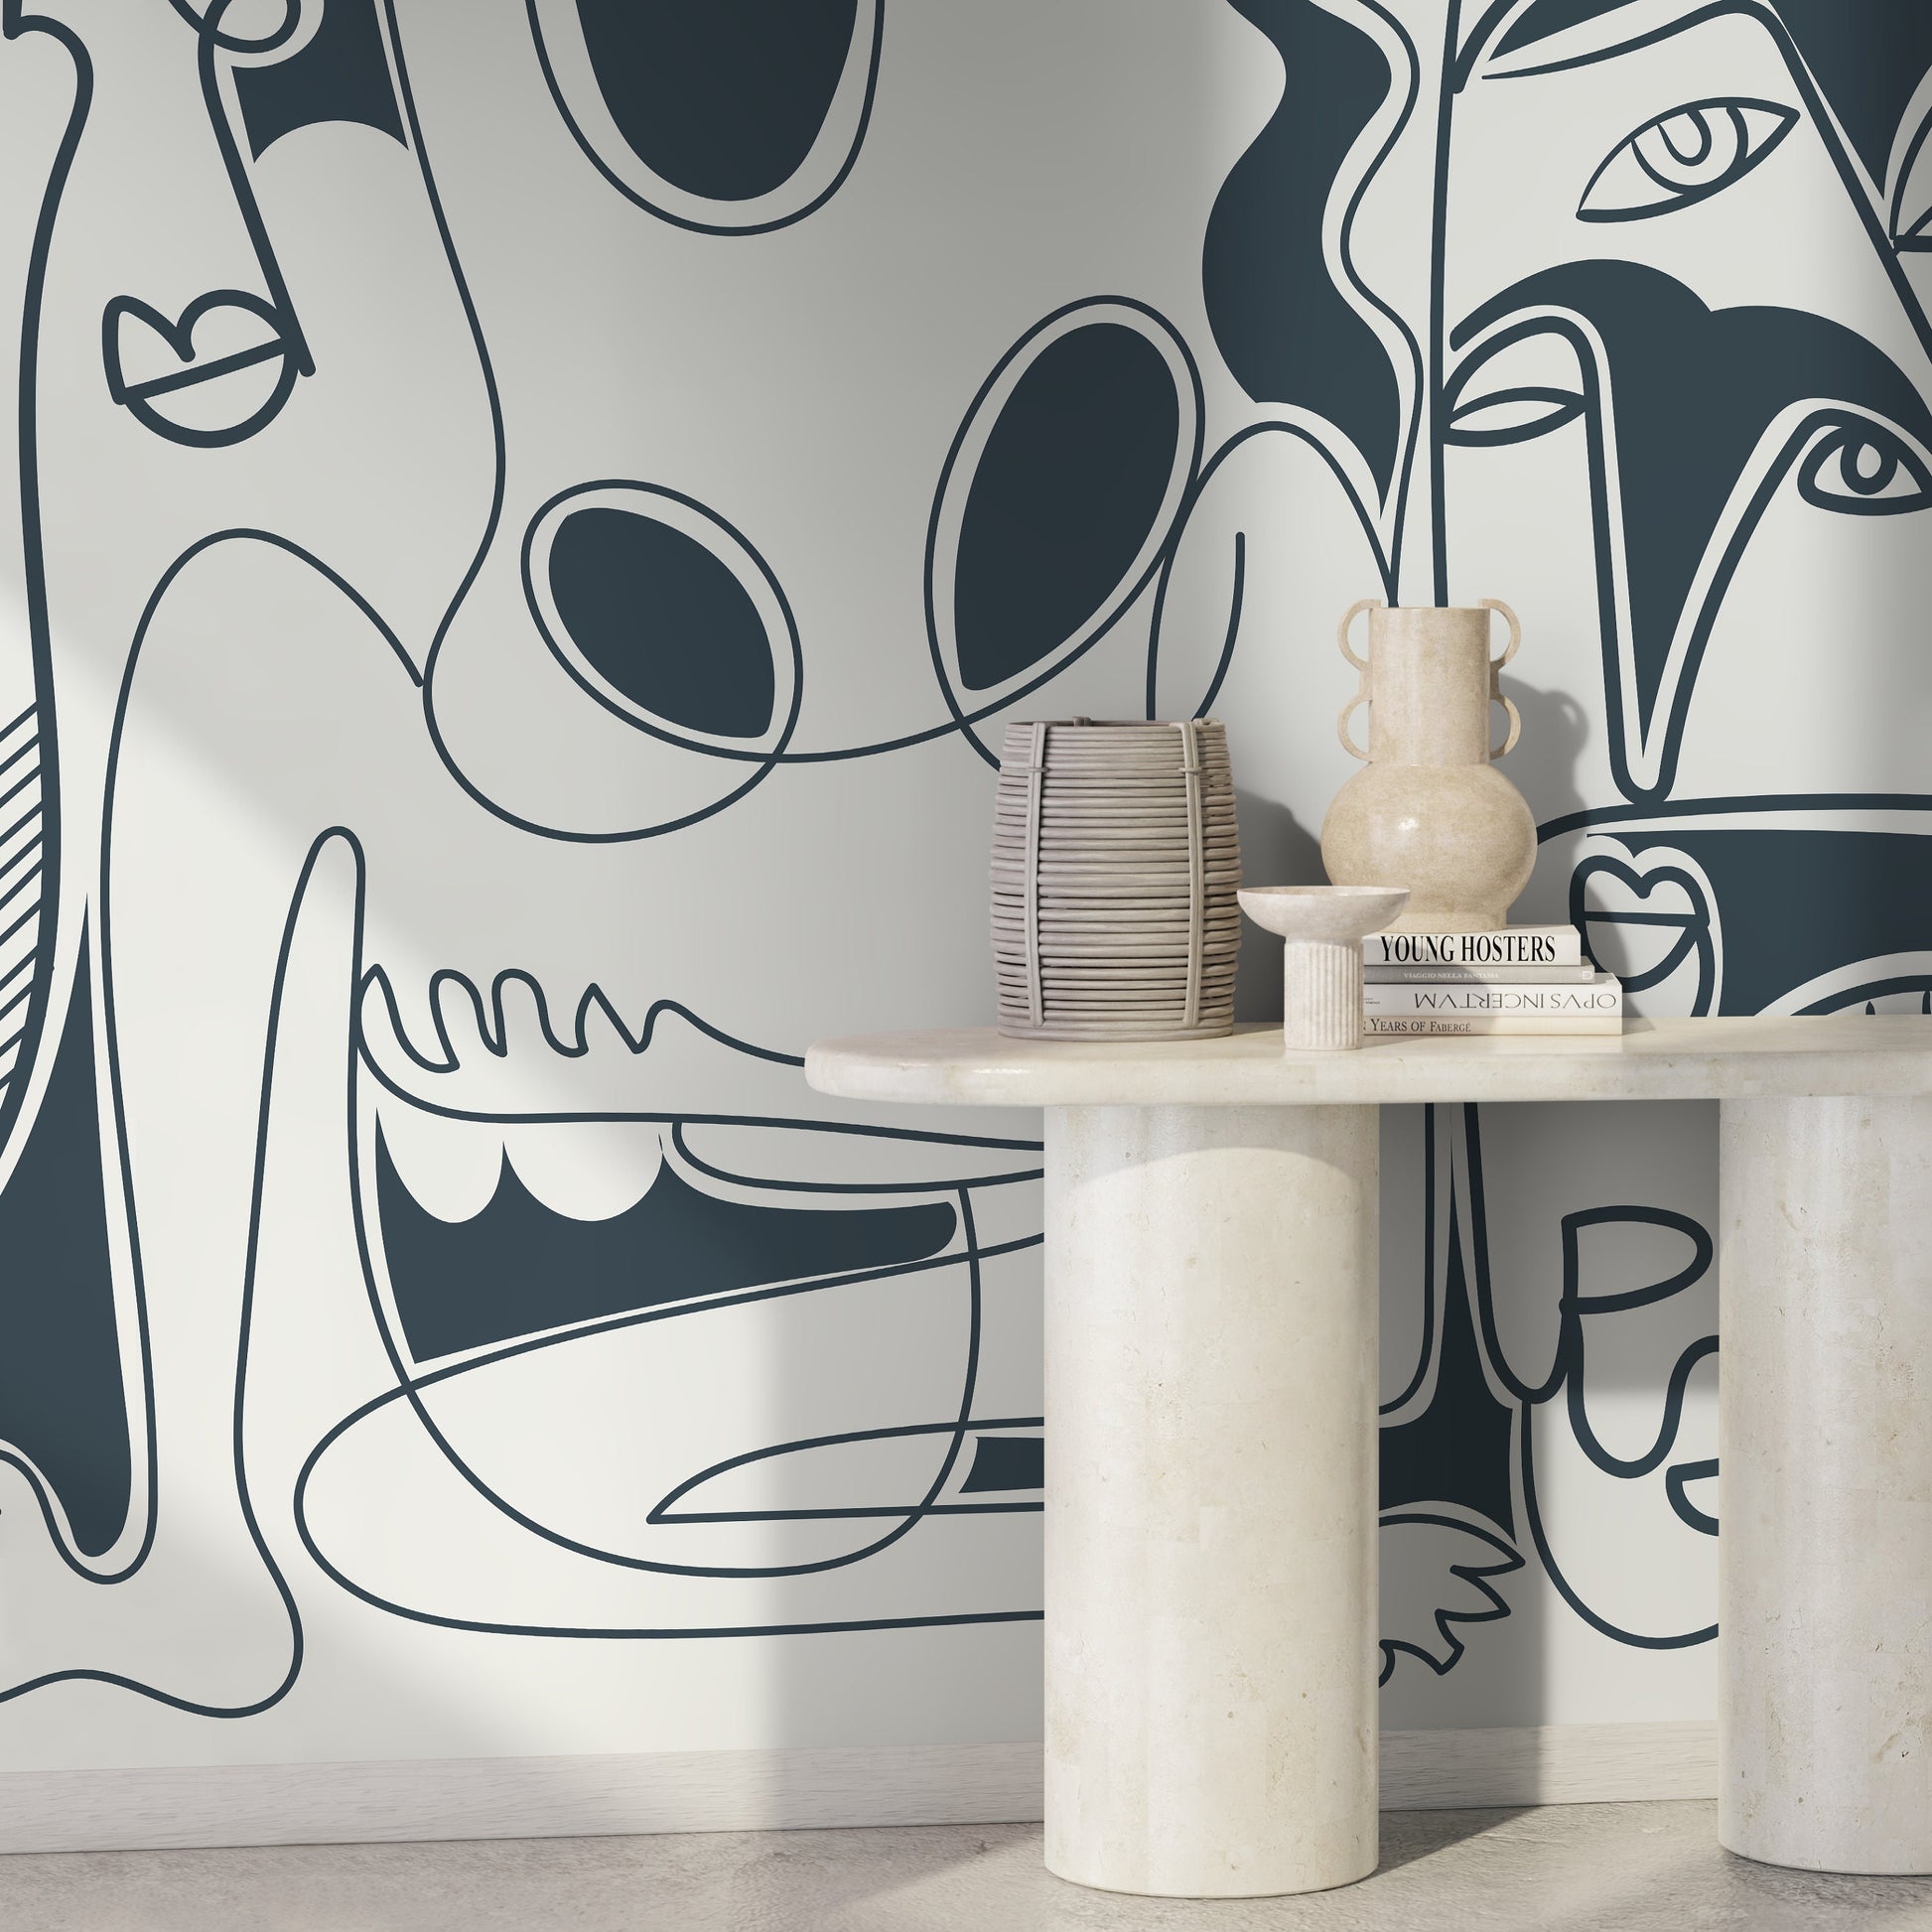 Grey Line Art Mural Abstract Wallpaper Hand Drawing Wallpaper Peel and Stick Wallpaper Home Decor - D590